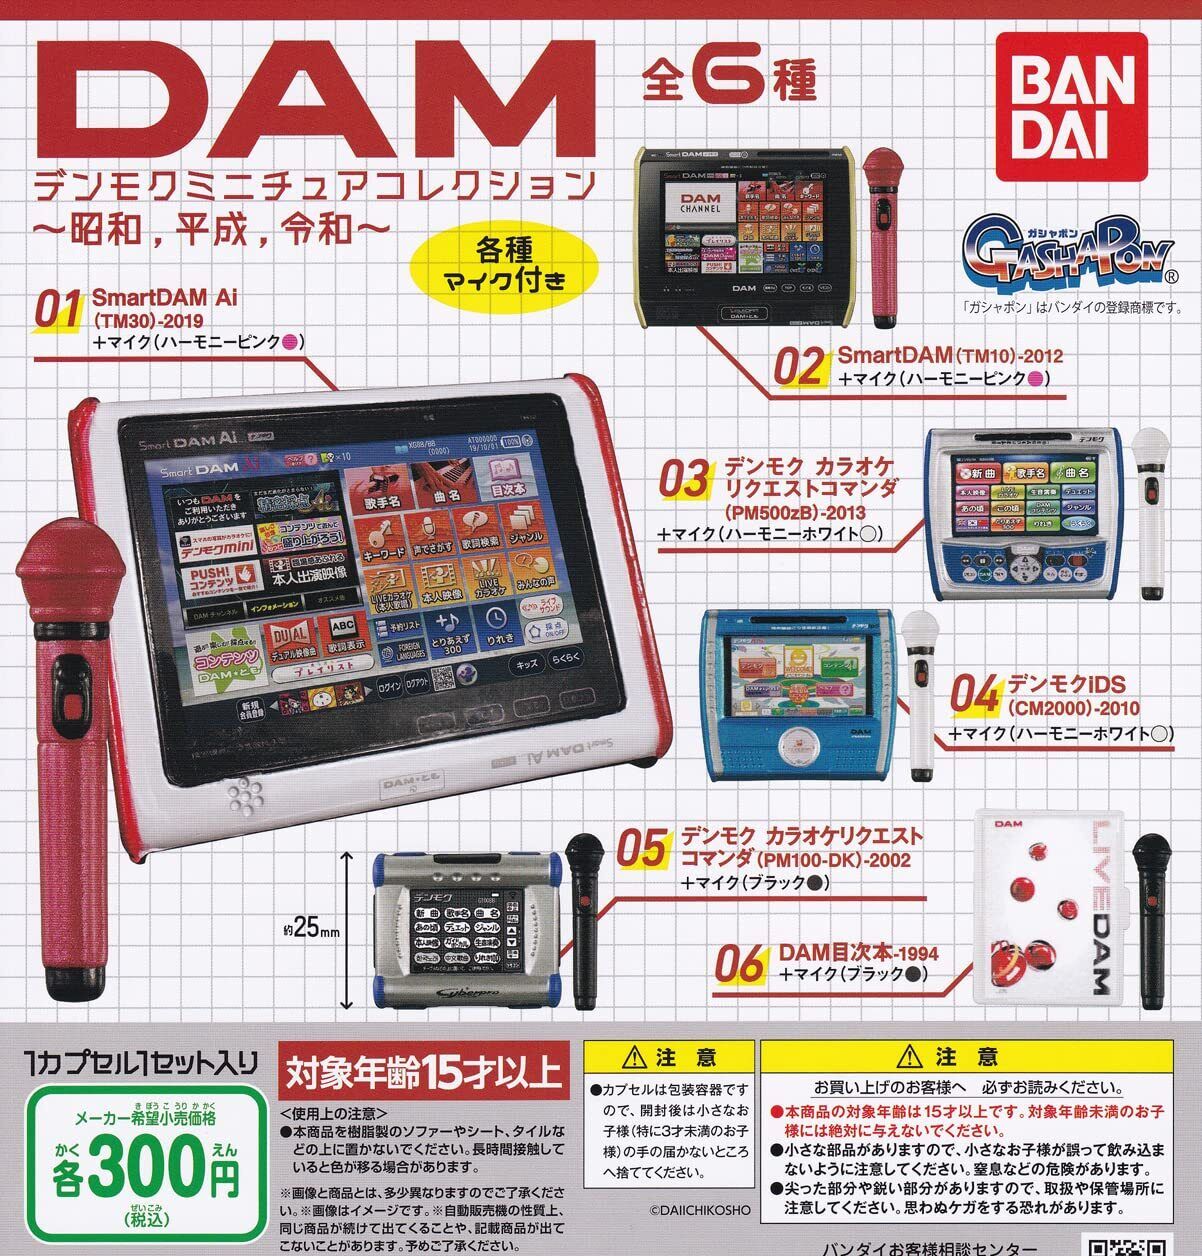 BANDAI DAM Denmoku Miniature Collection Full Comp Gacha Gacha Capsule Toy Japan